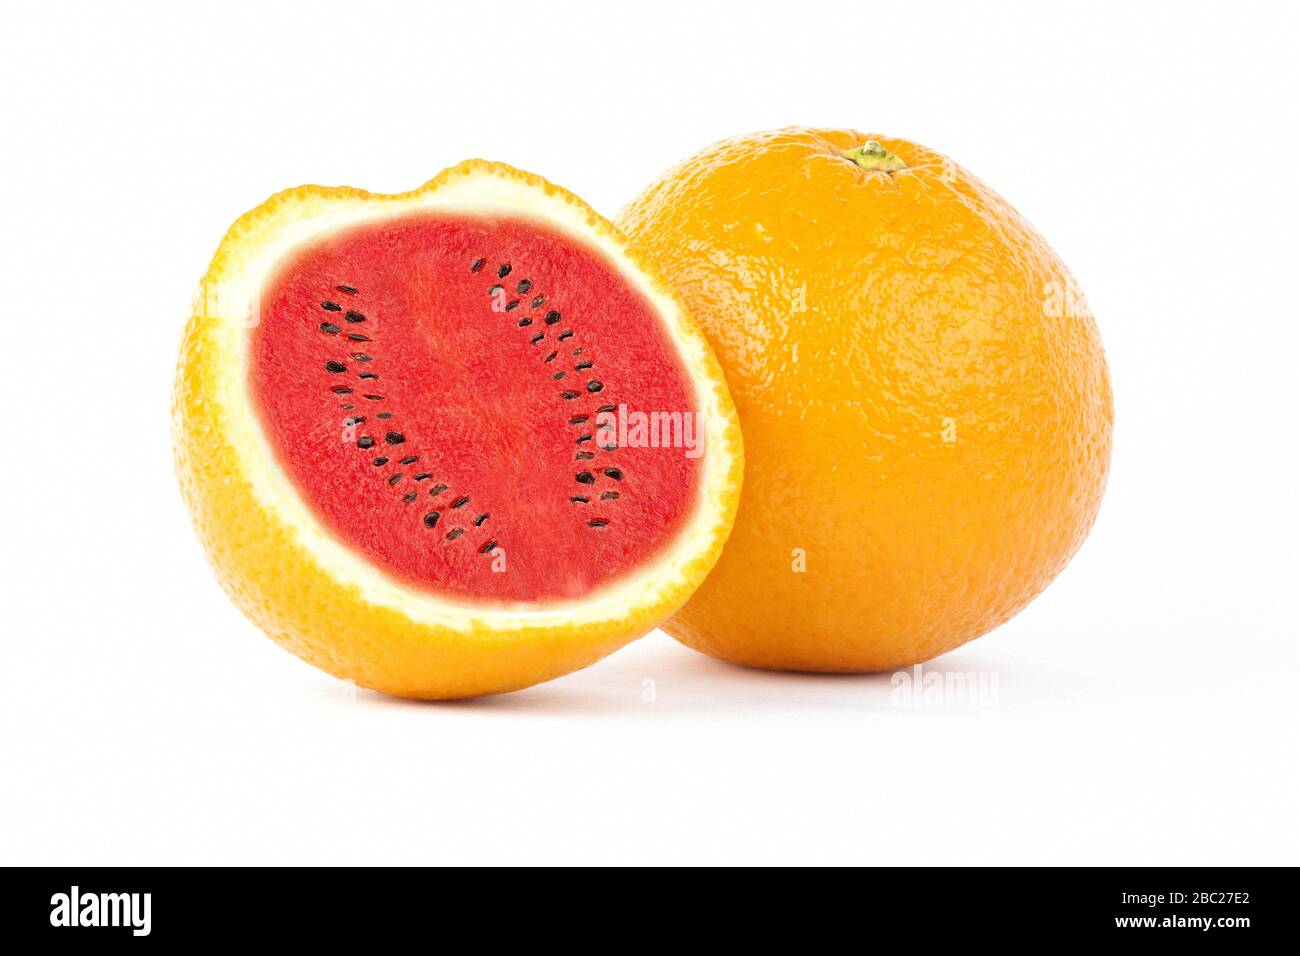 Photo manipulation of sliced orange fruit with red watermelon inside isolated on white background Stock Photo